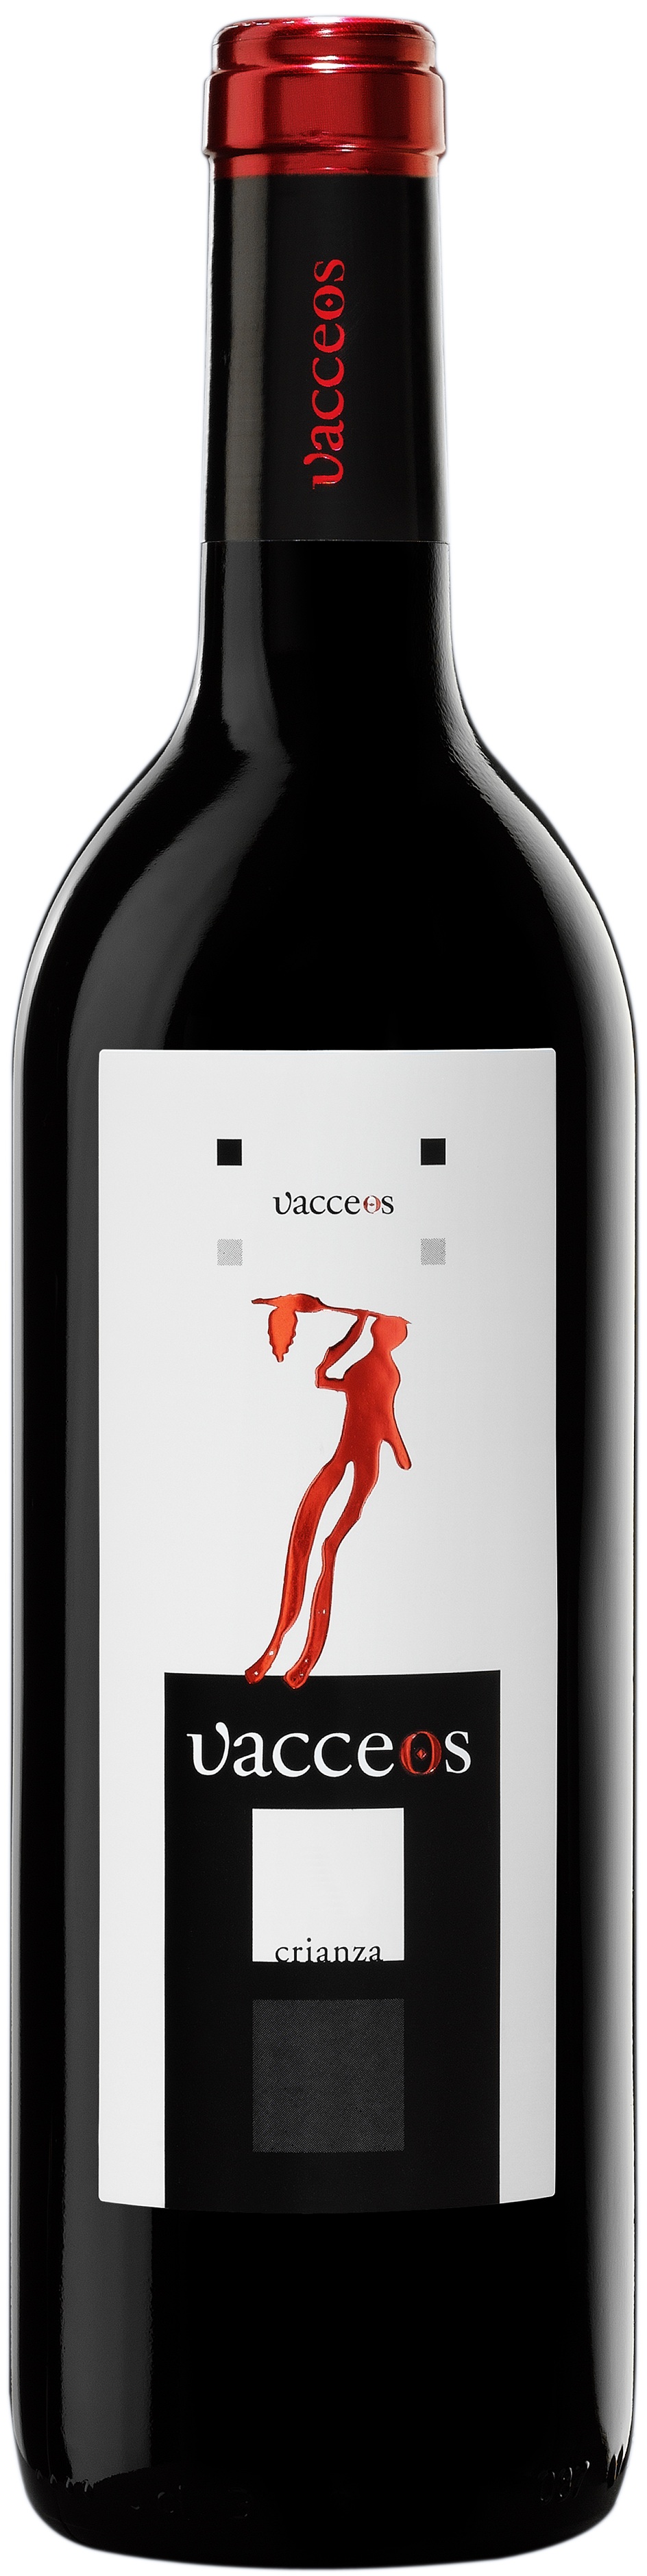 Image of Wine bottle Vacceos Crianza